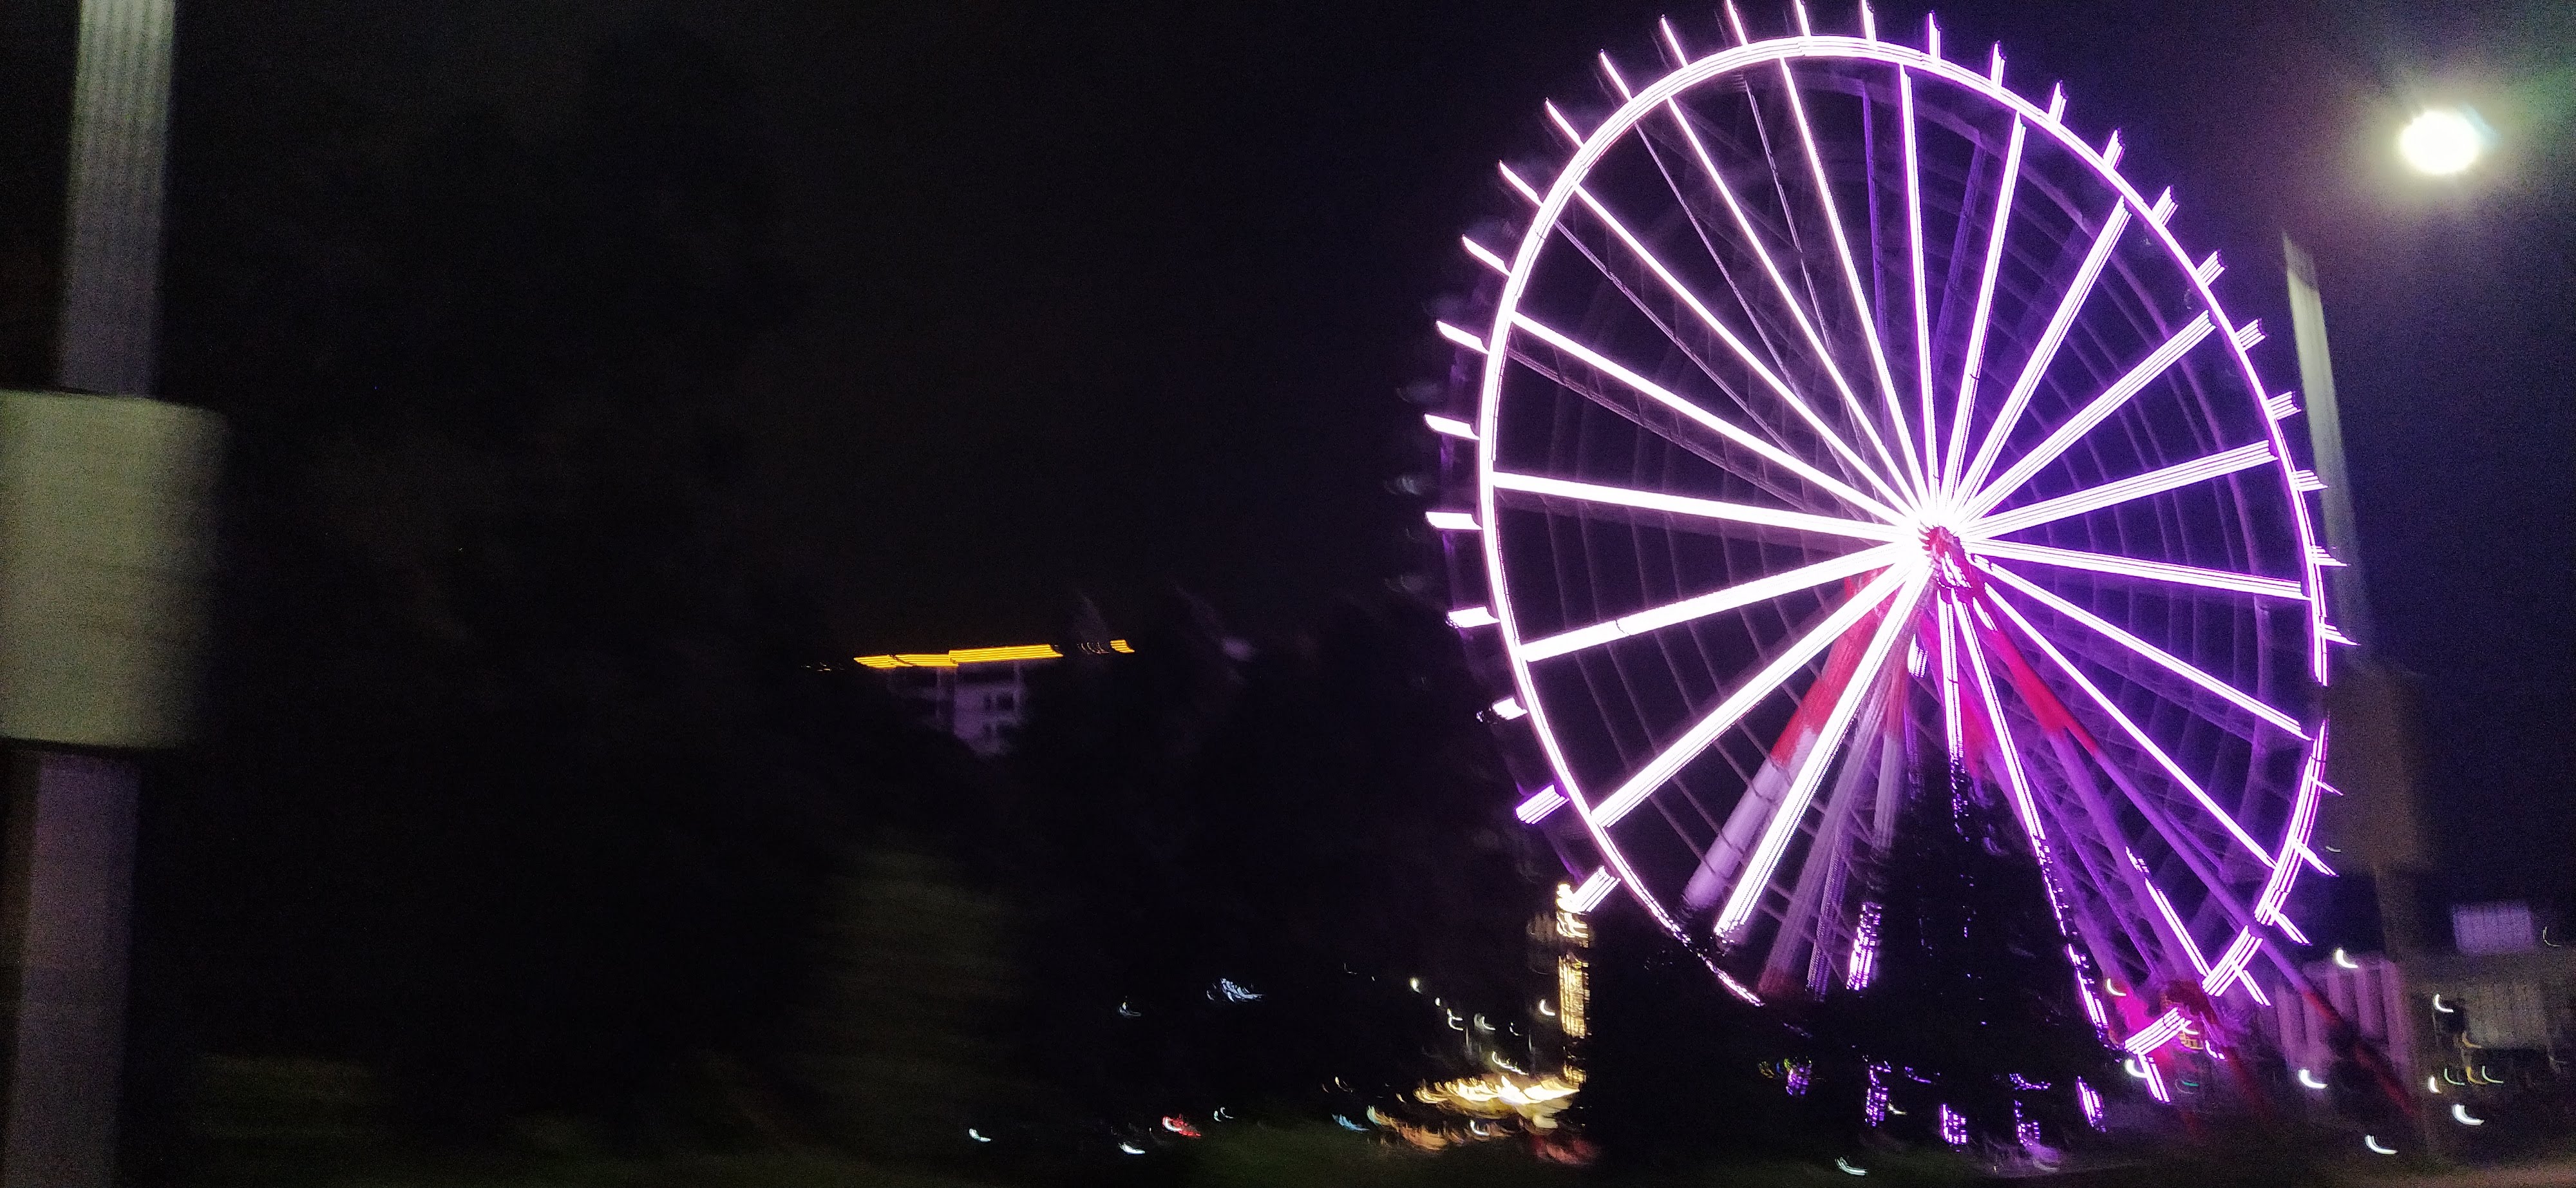 Two Rivers Mall Ferris Wheel - Night View7